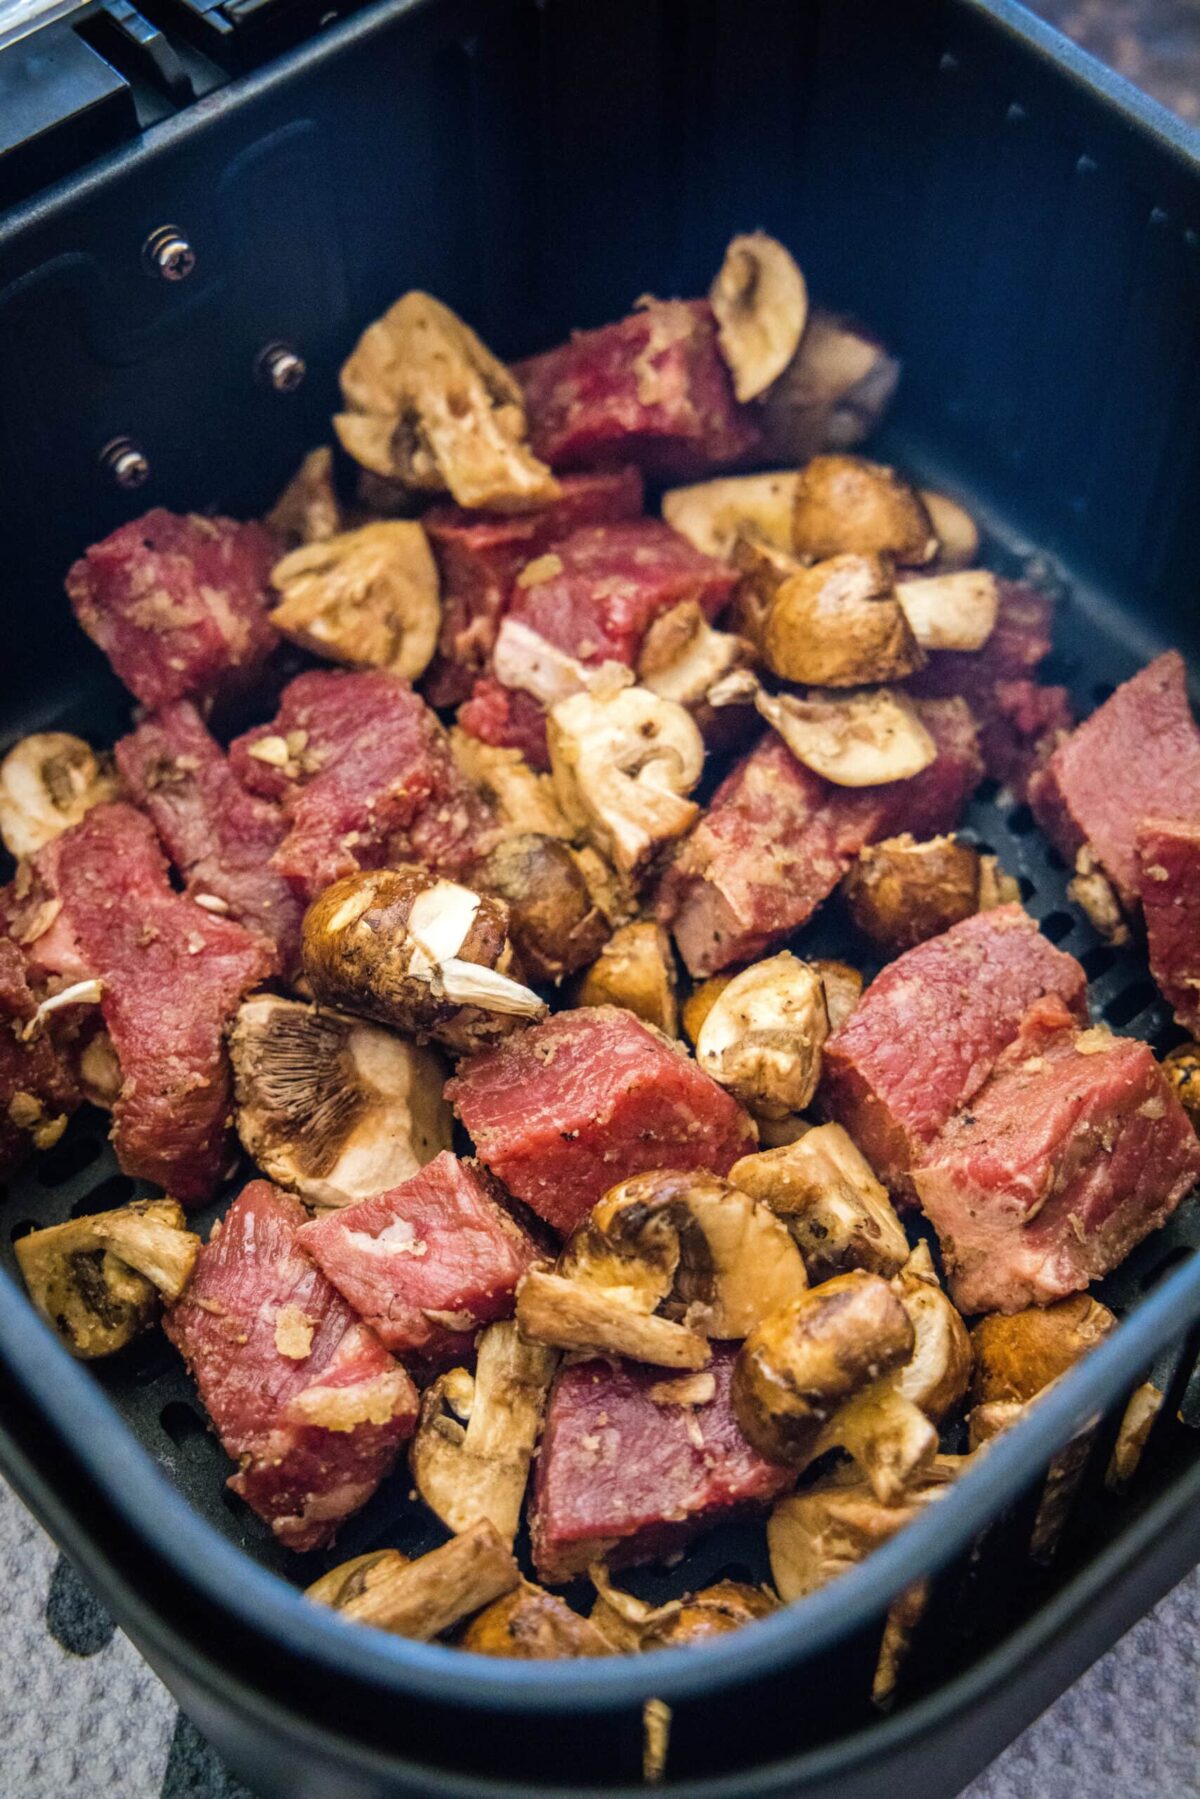 Seasoned, uncooked pieces of steak and mushrooms in an air fryer basket